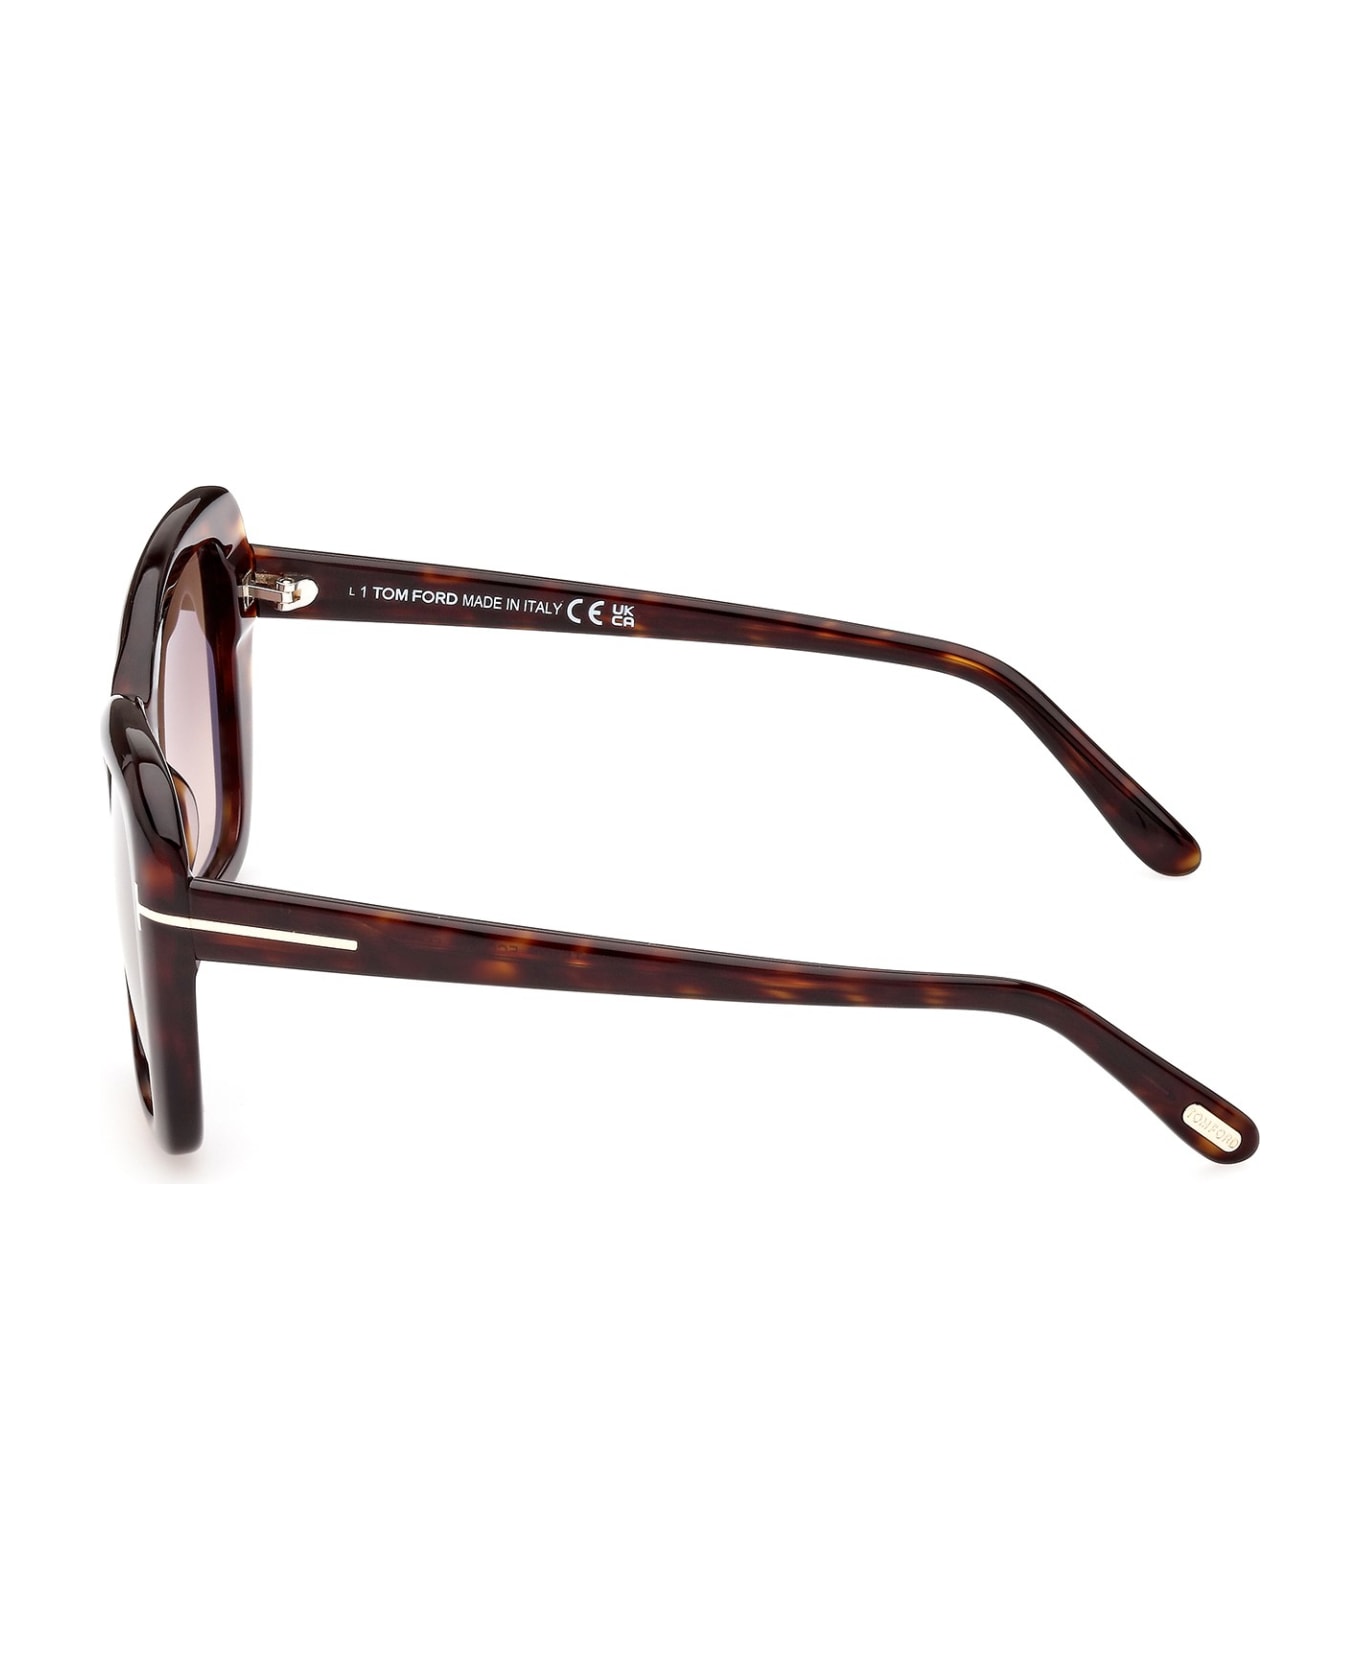 Tom Ford Eyewear Sunglasses - Marrone/Marrone